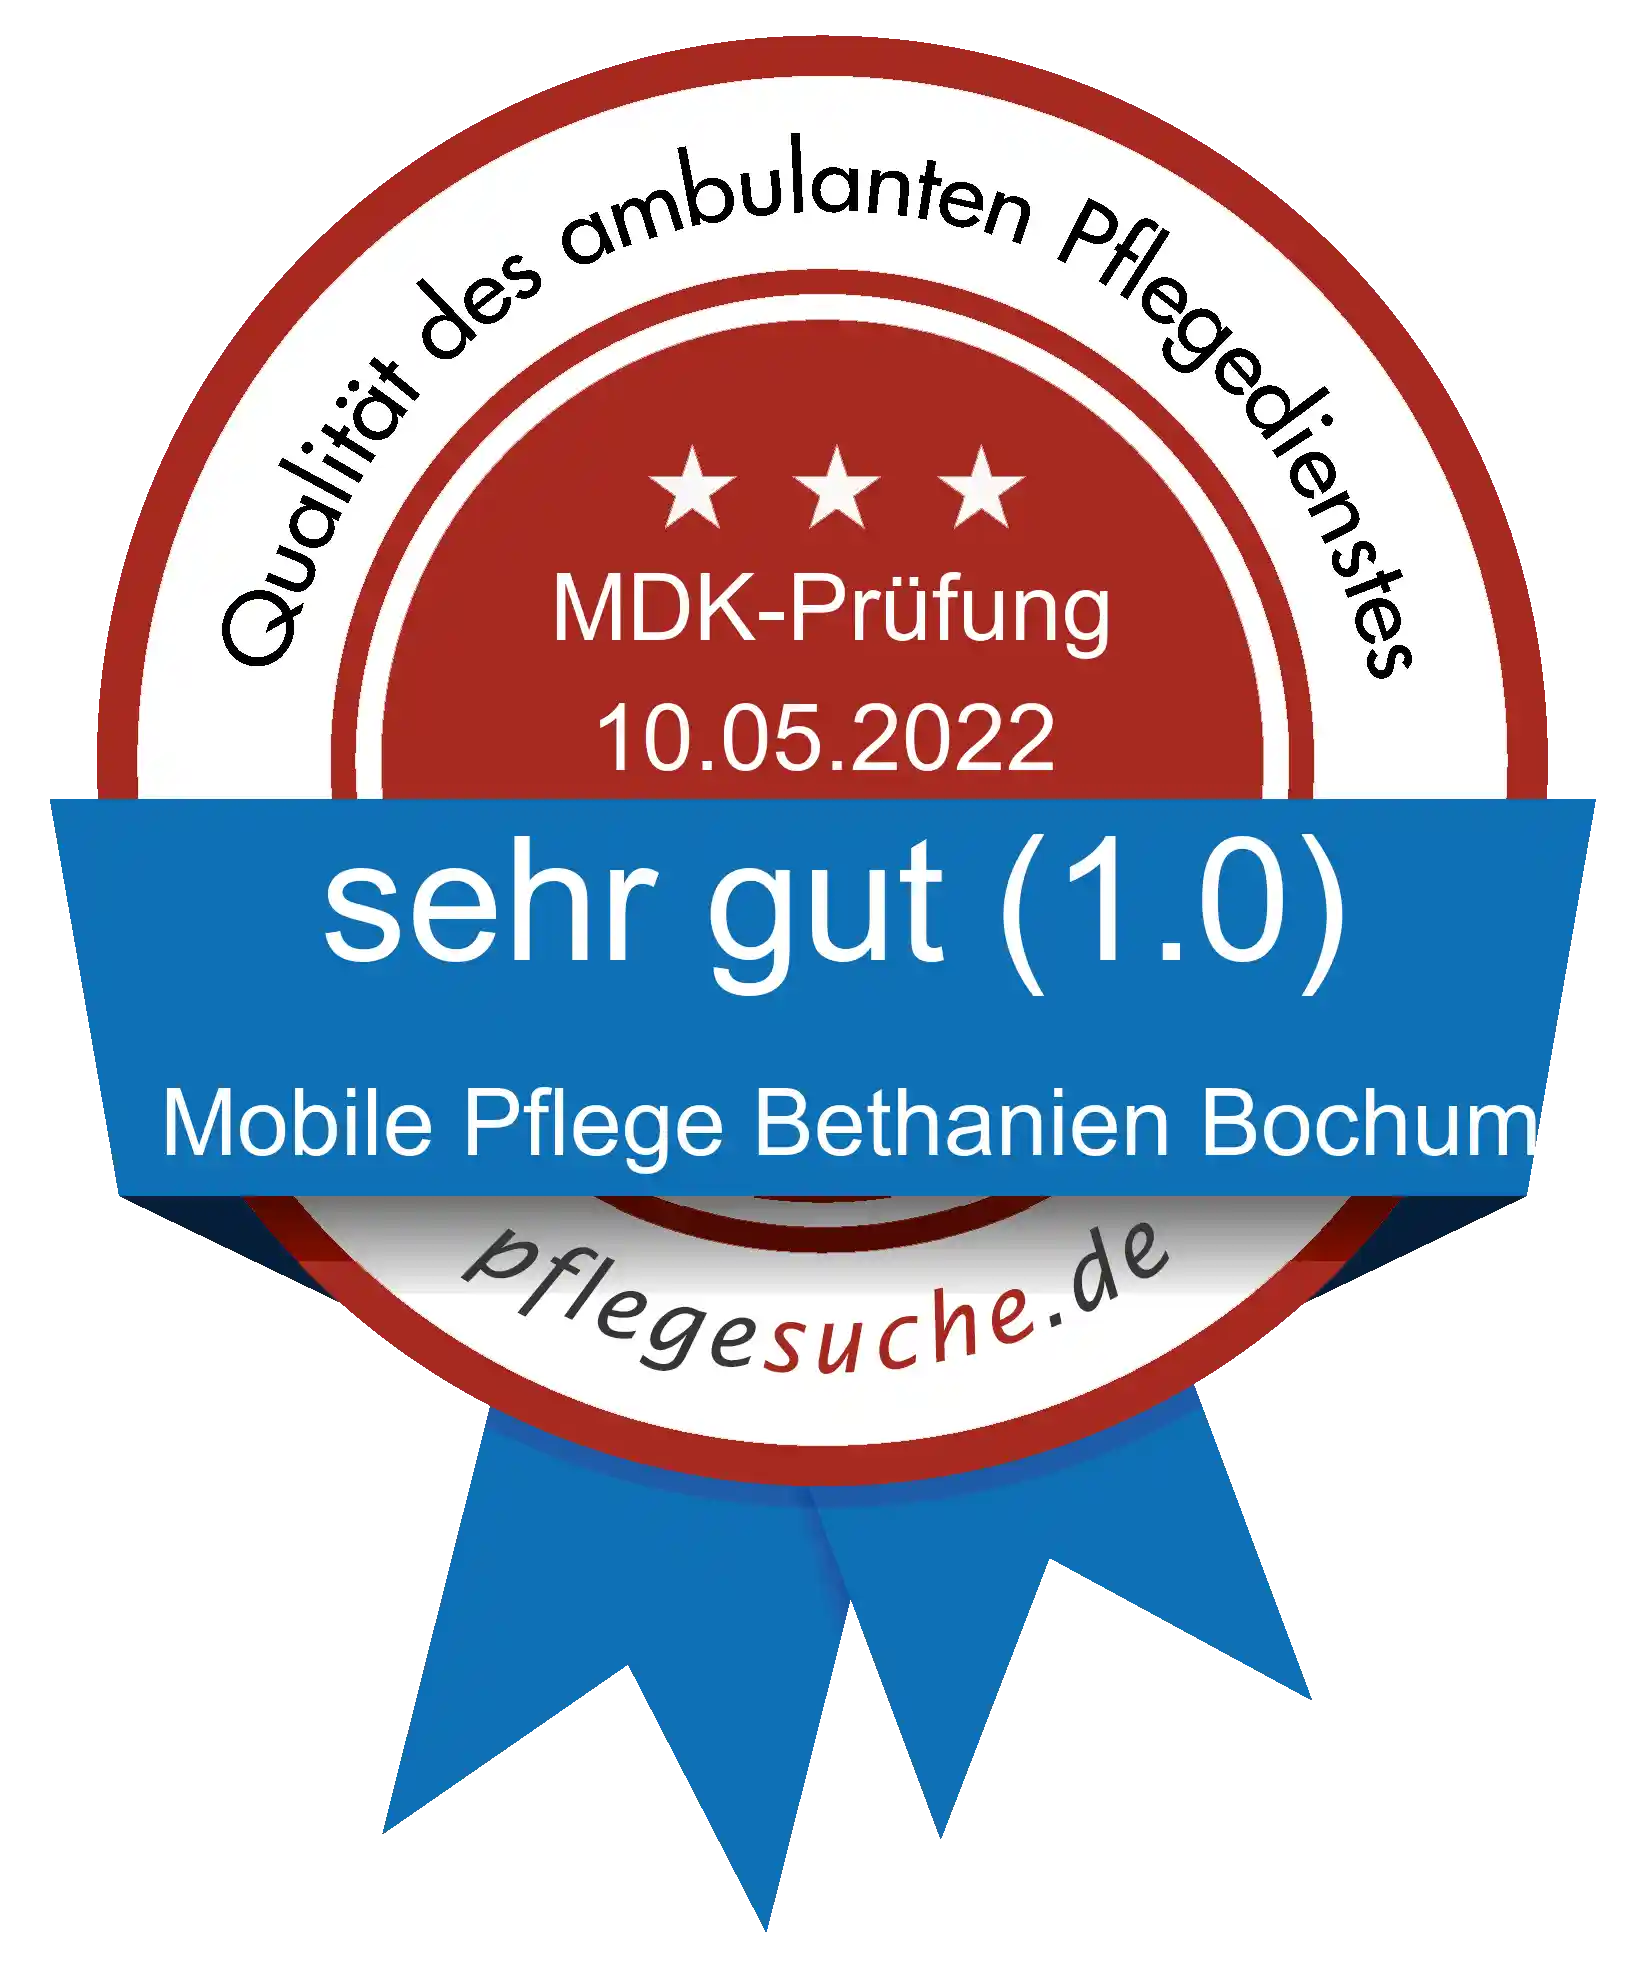 Siegel Benotung: Mobile Pflege Bethanien Bochum